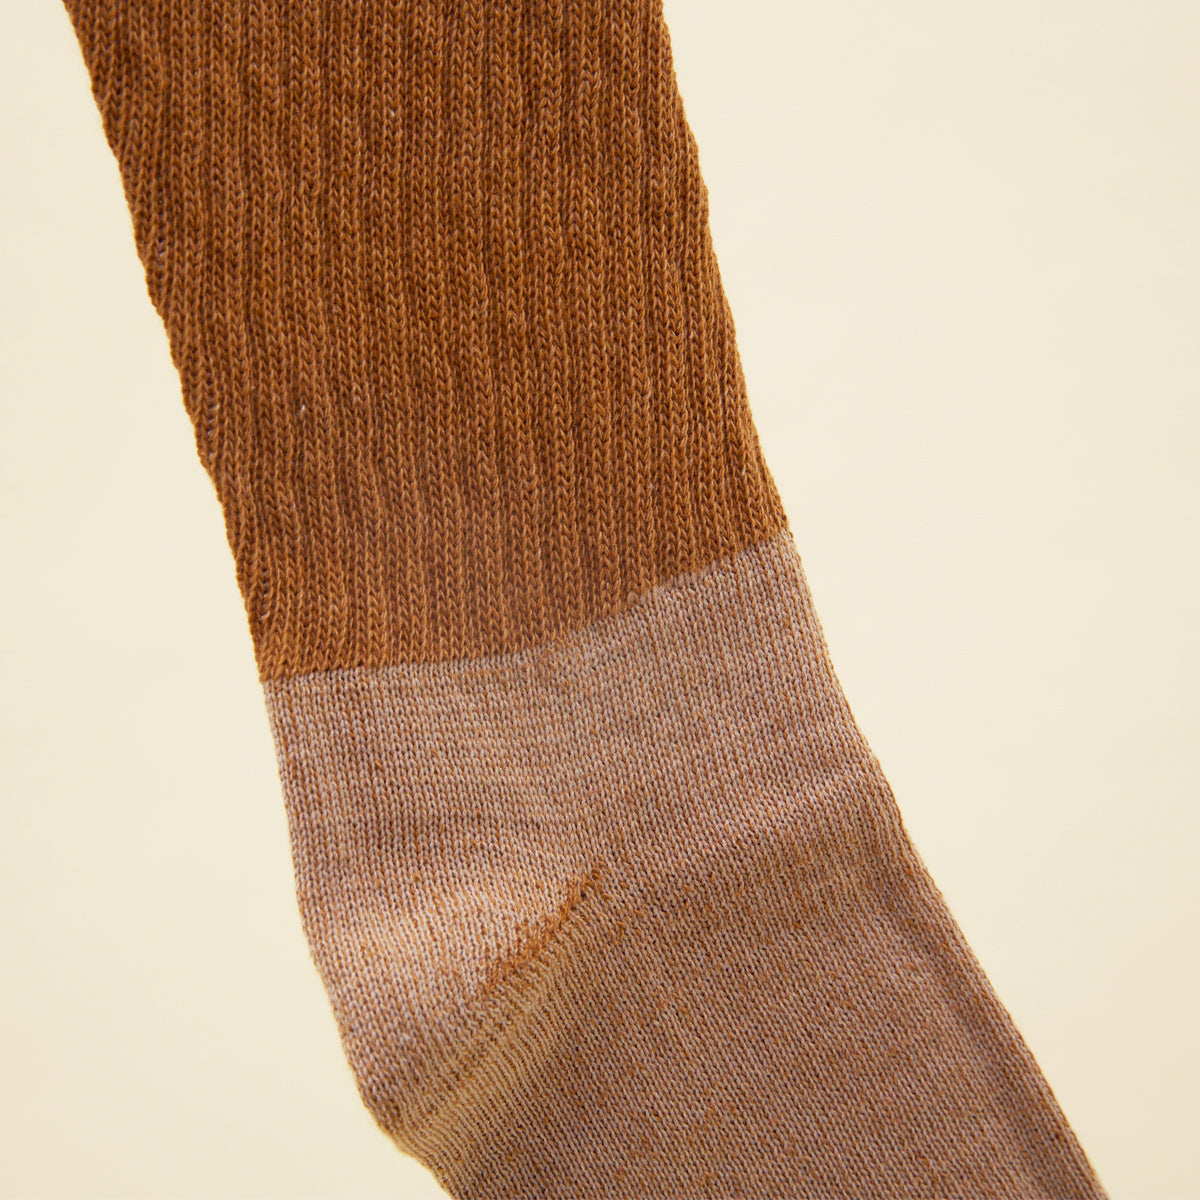 Organic Cotton Socks - Brown